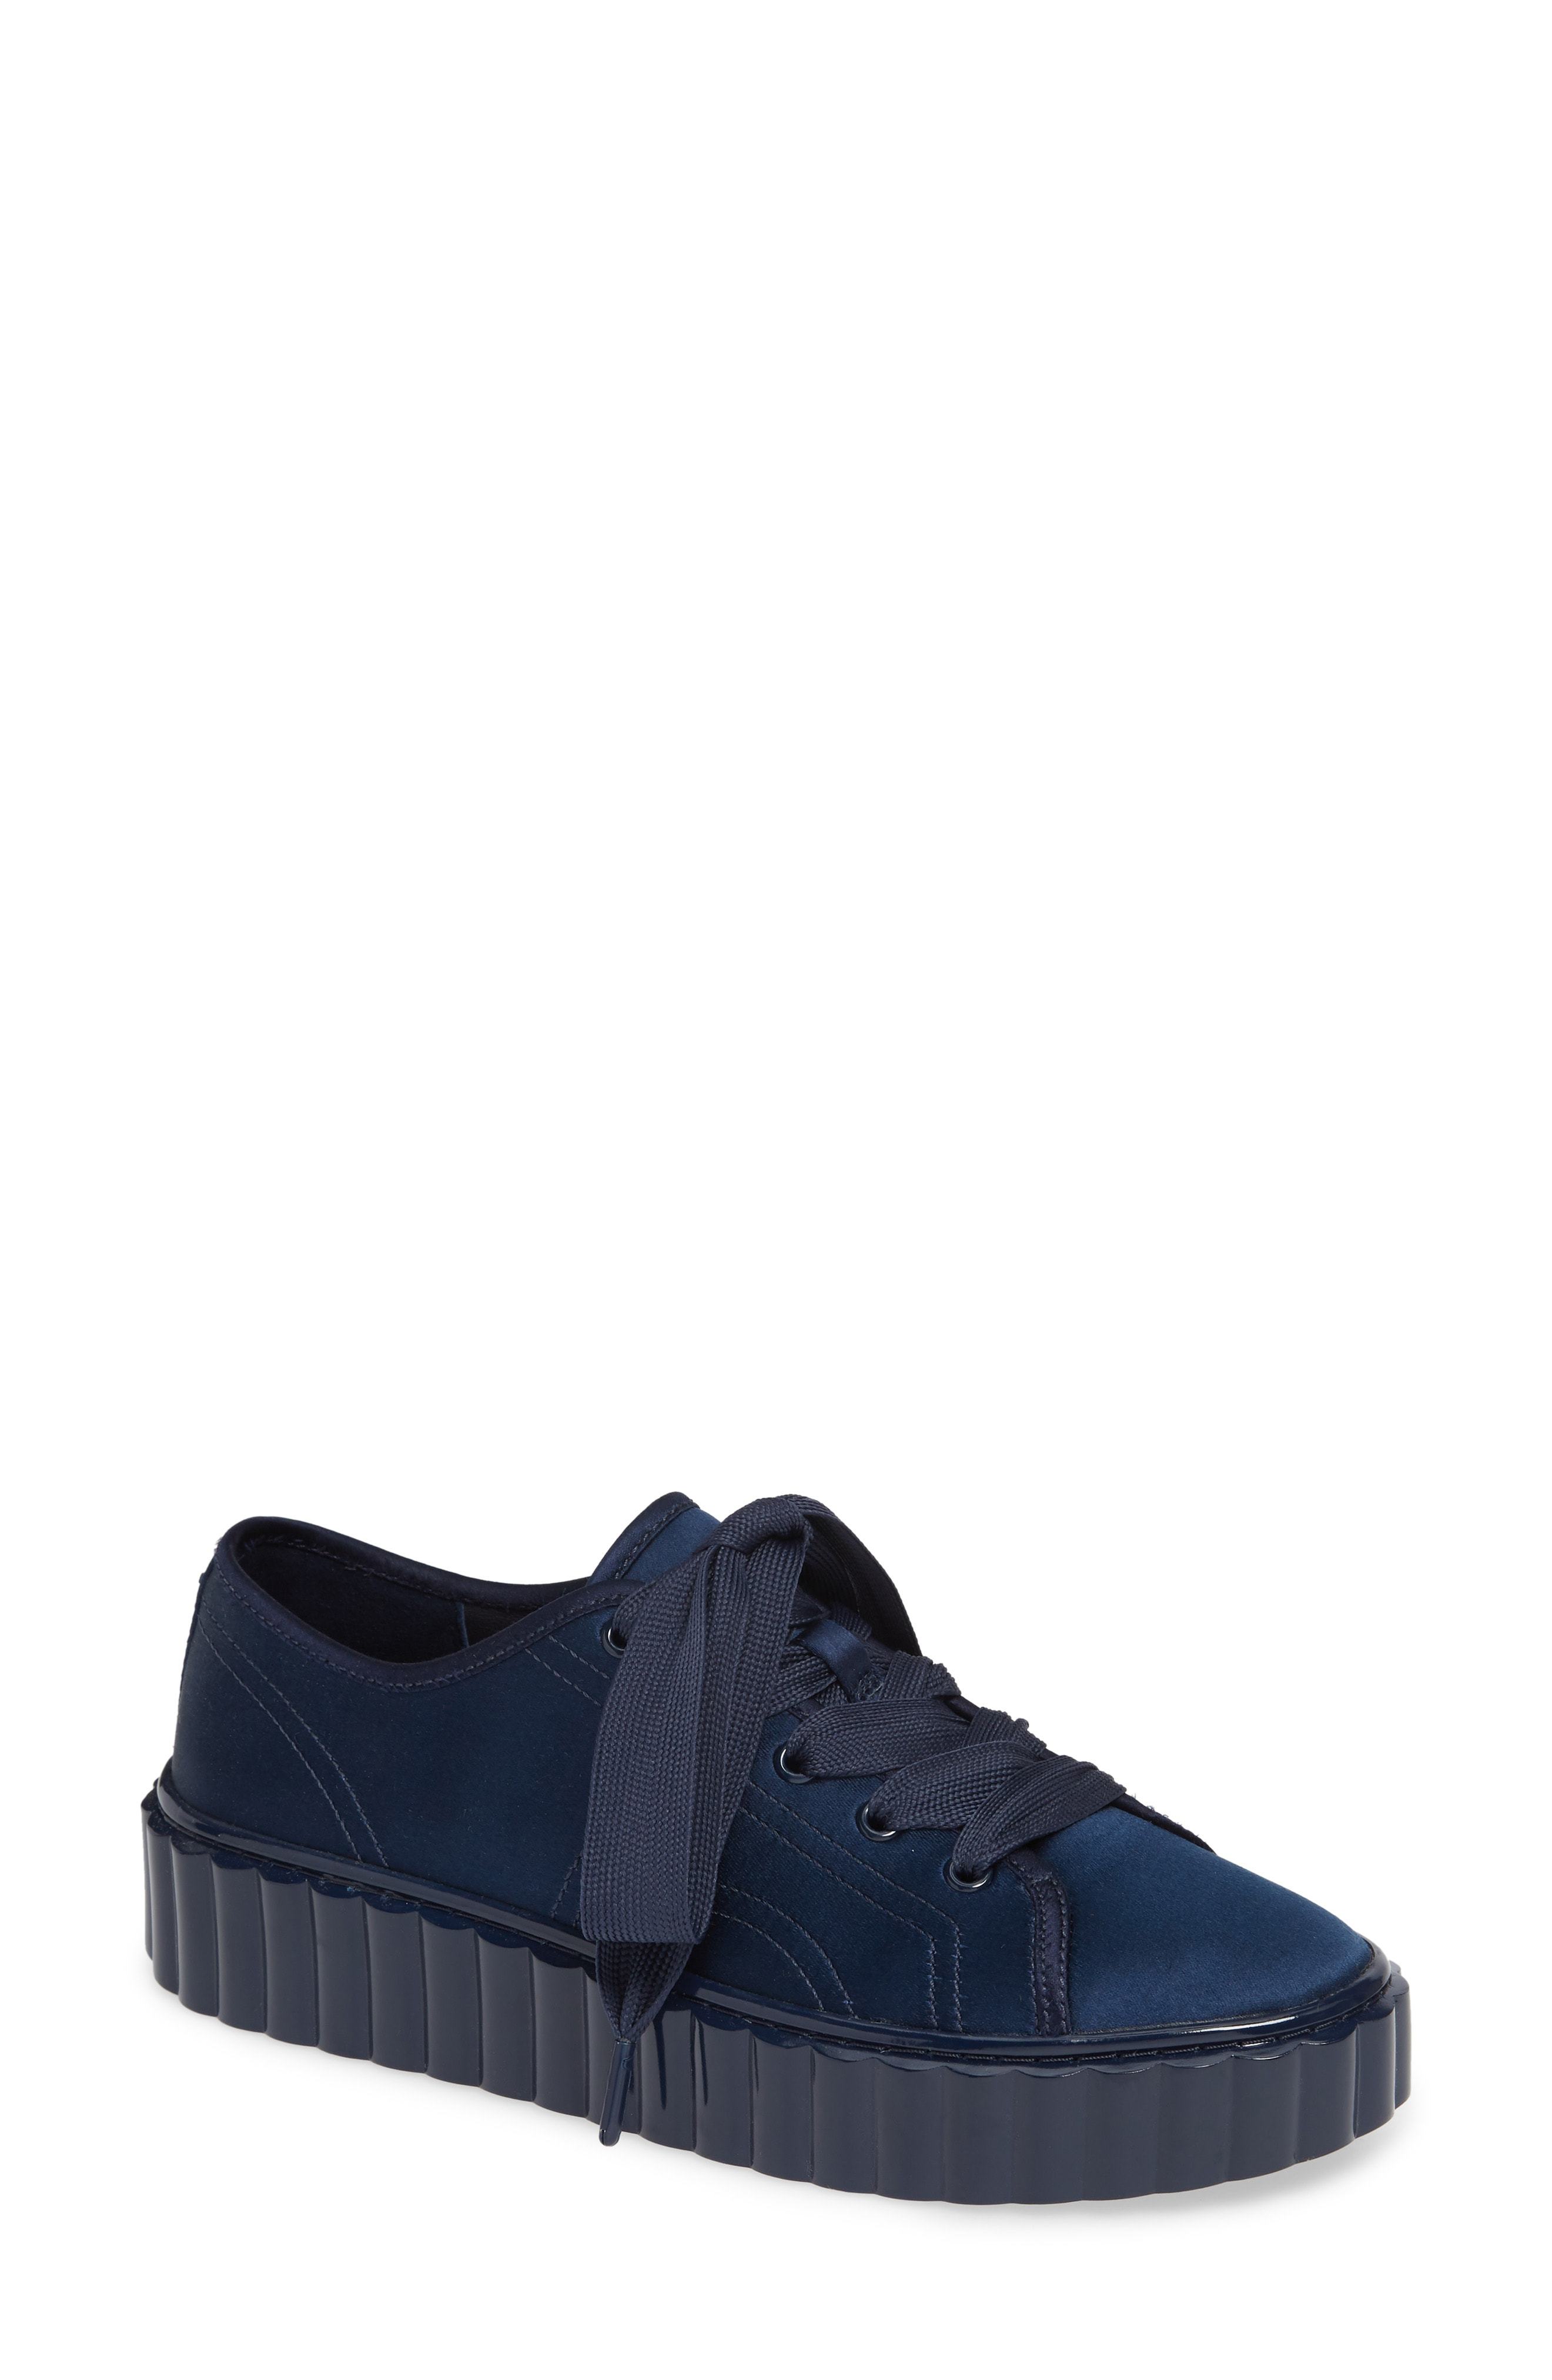 Tory Burch Scallop Cotton Silk Sneaker, $128 | Nordstrom | Lookastic